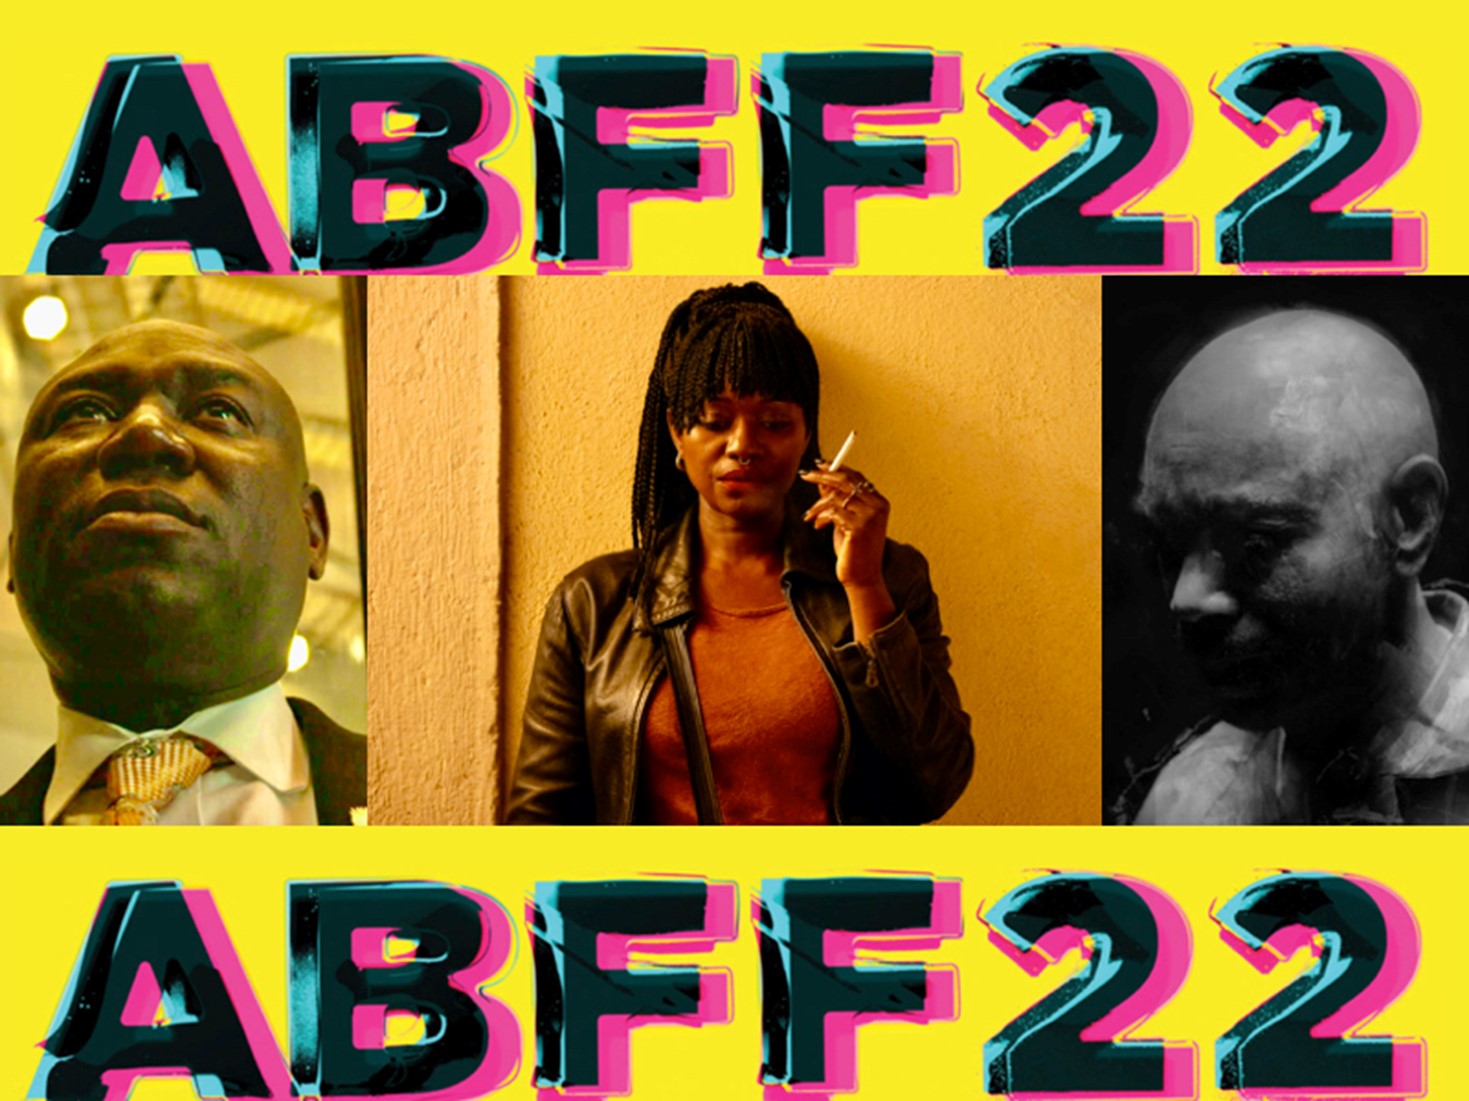 American Black Film Festival 2022